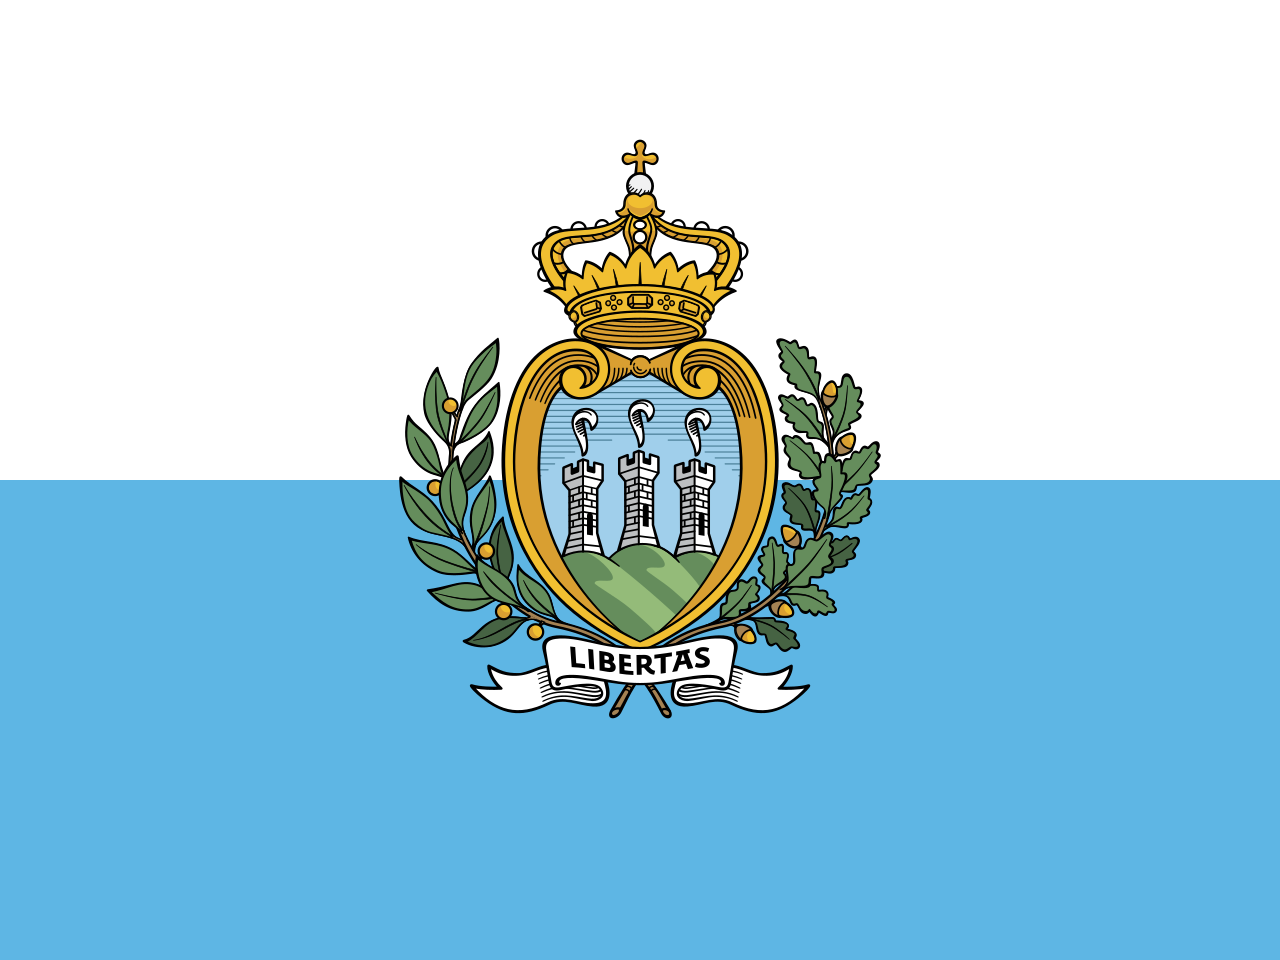 Сан-Марино - Республика